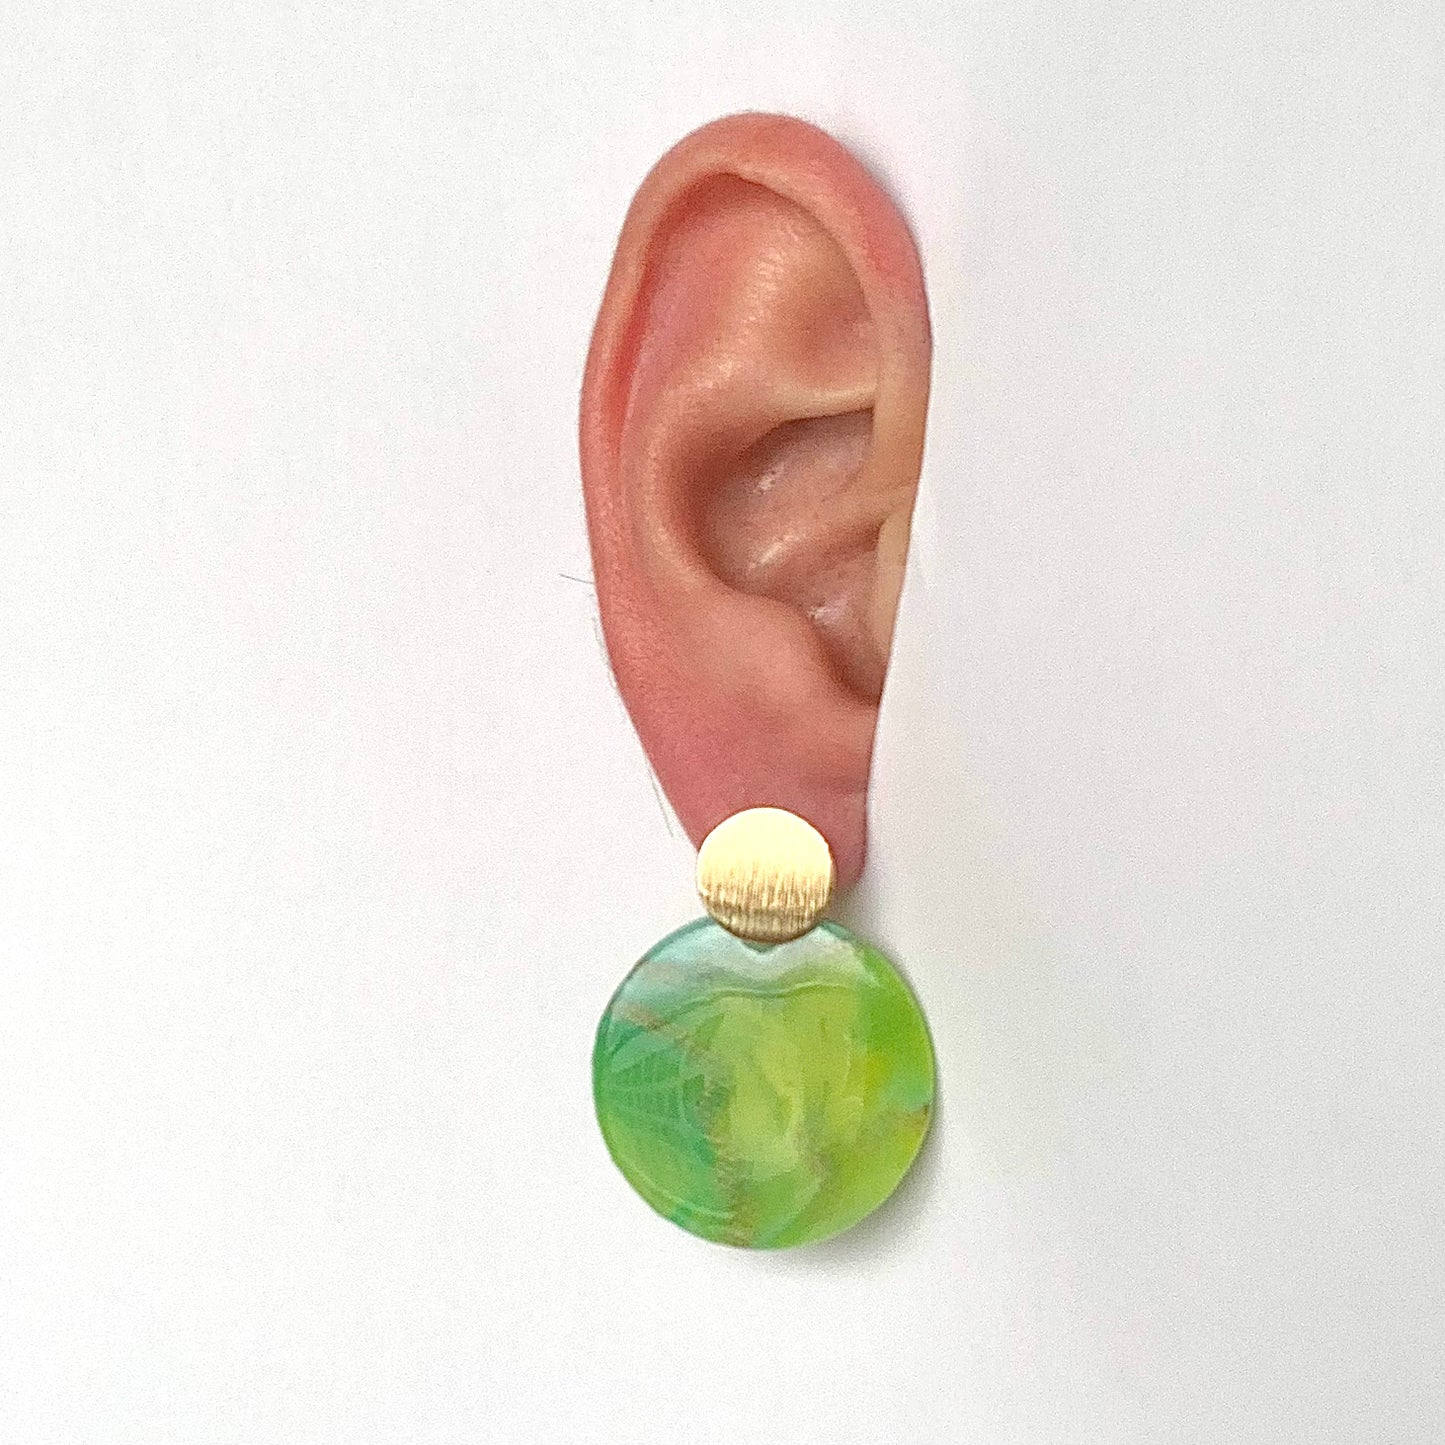 Recycled plastic bottle tops earrings handmade in London artesian quirky